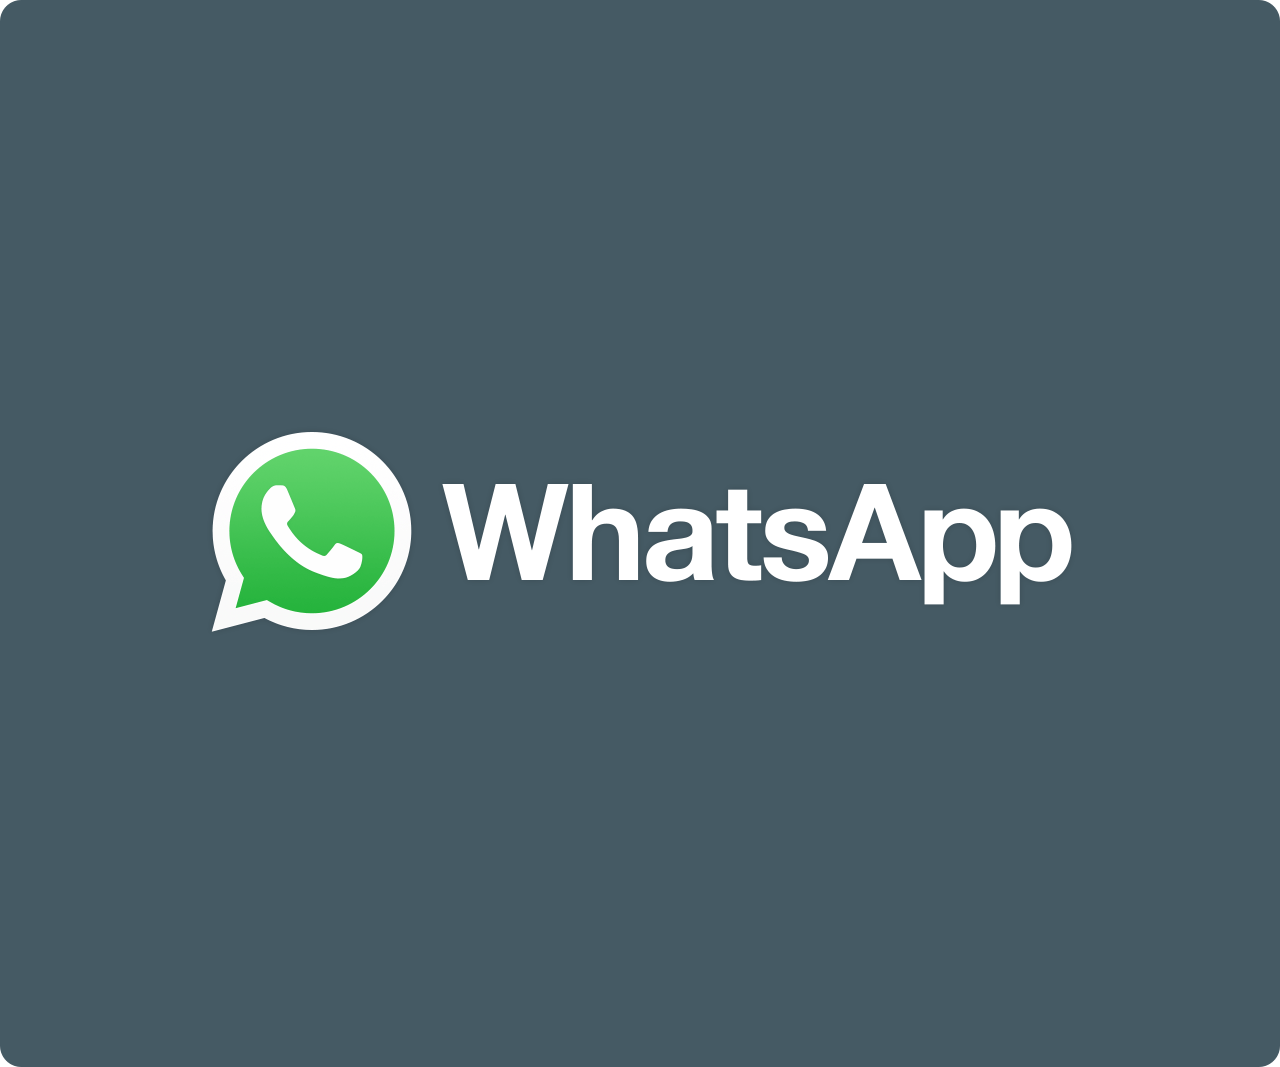 Green Colored Brand Logo - WhatsApp Brand Resources